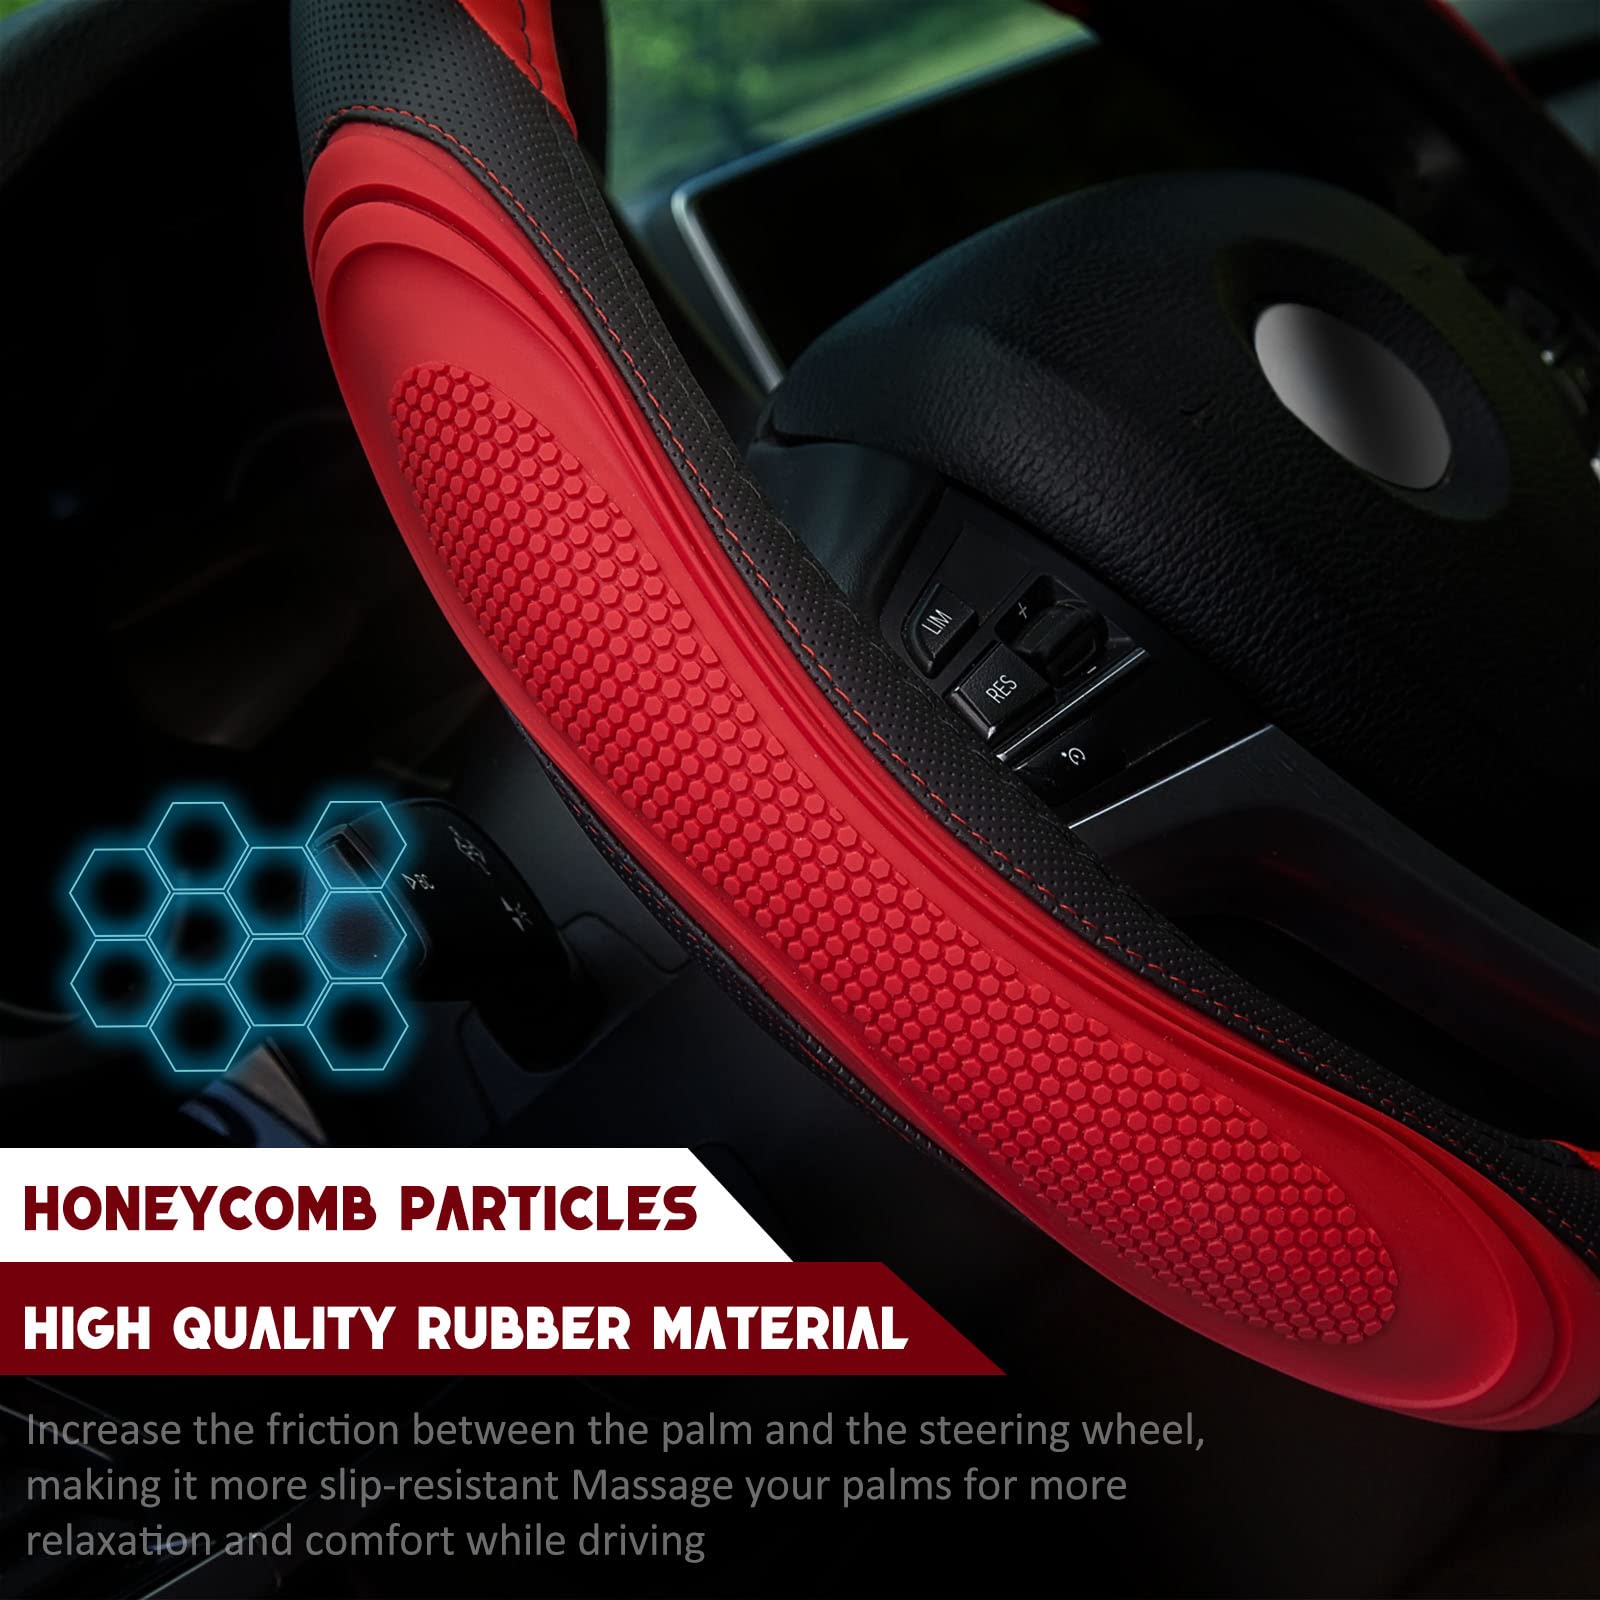 XCBYT Steering Wheel Cover - 14.5-15 Inch Car Microfiber Leather Steering Wheel Wrap Black Red Sports Fan Design Non-Slip for Man Women